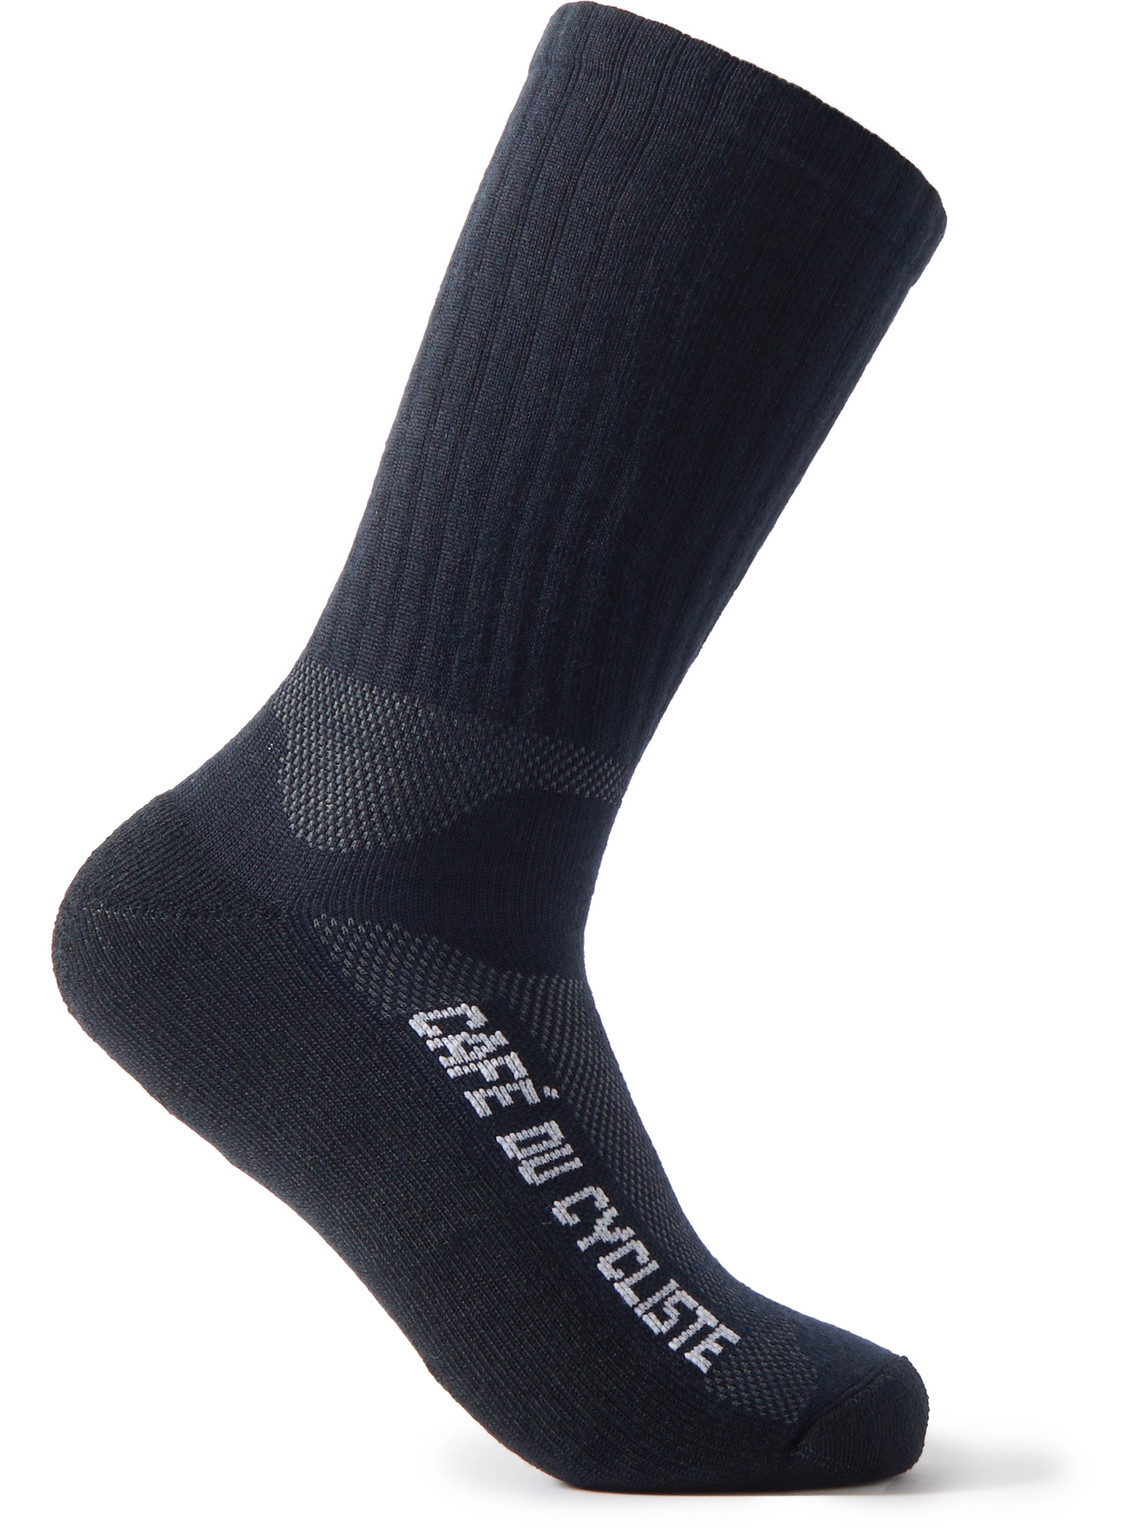 Merino Wool-Blend Cycling Socks